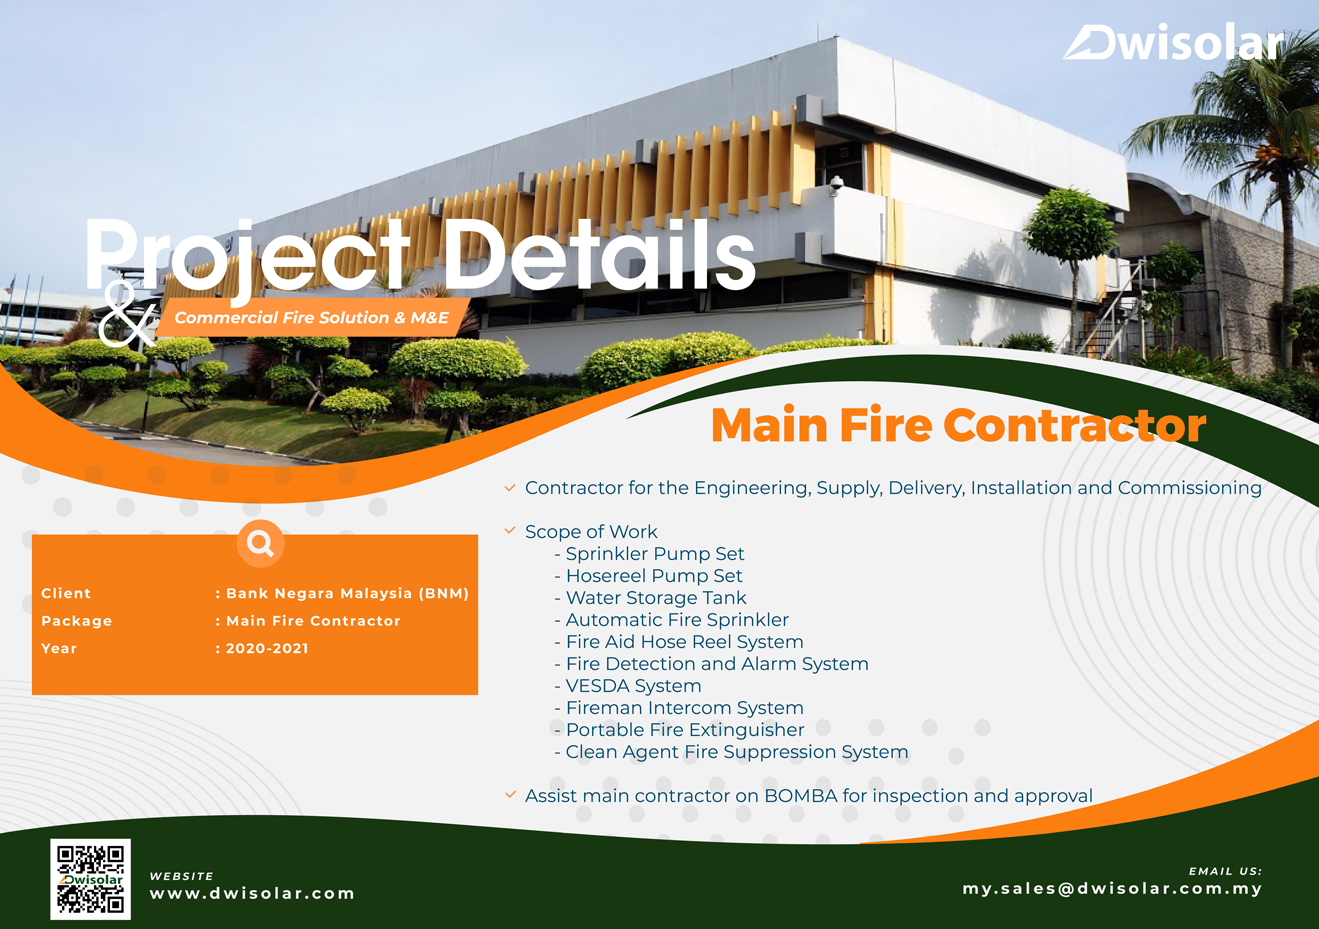 Project Details Commercial Fire Solution & M&E 3.png